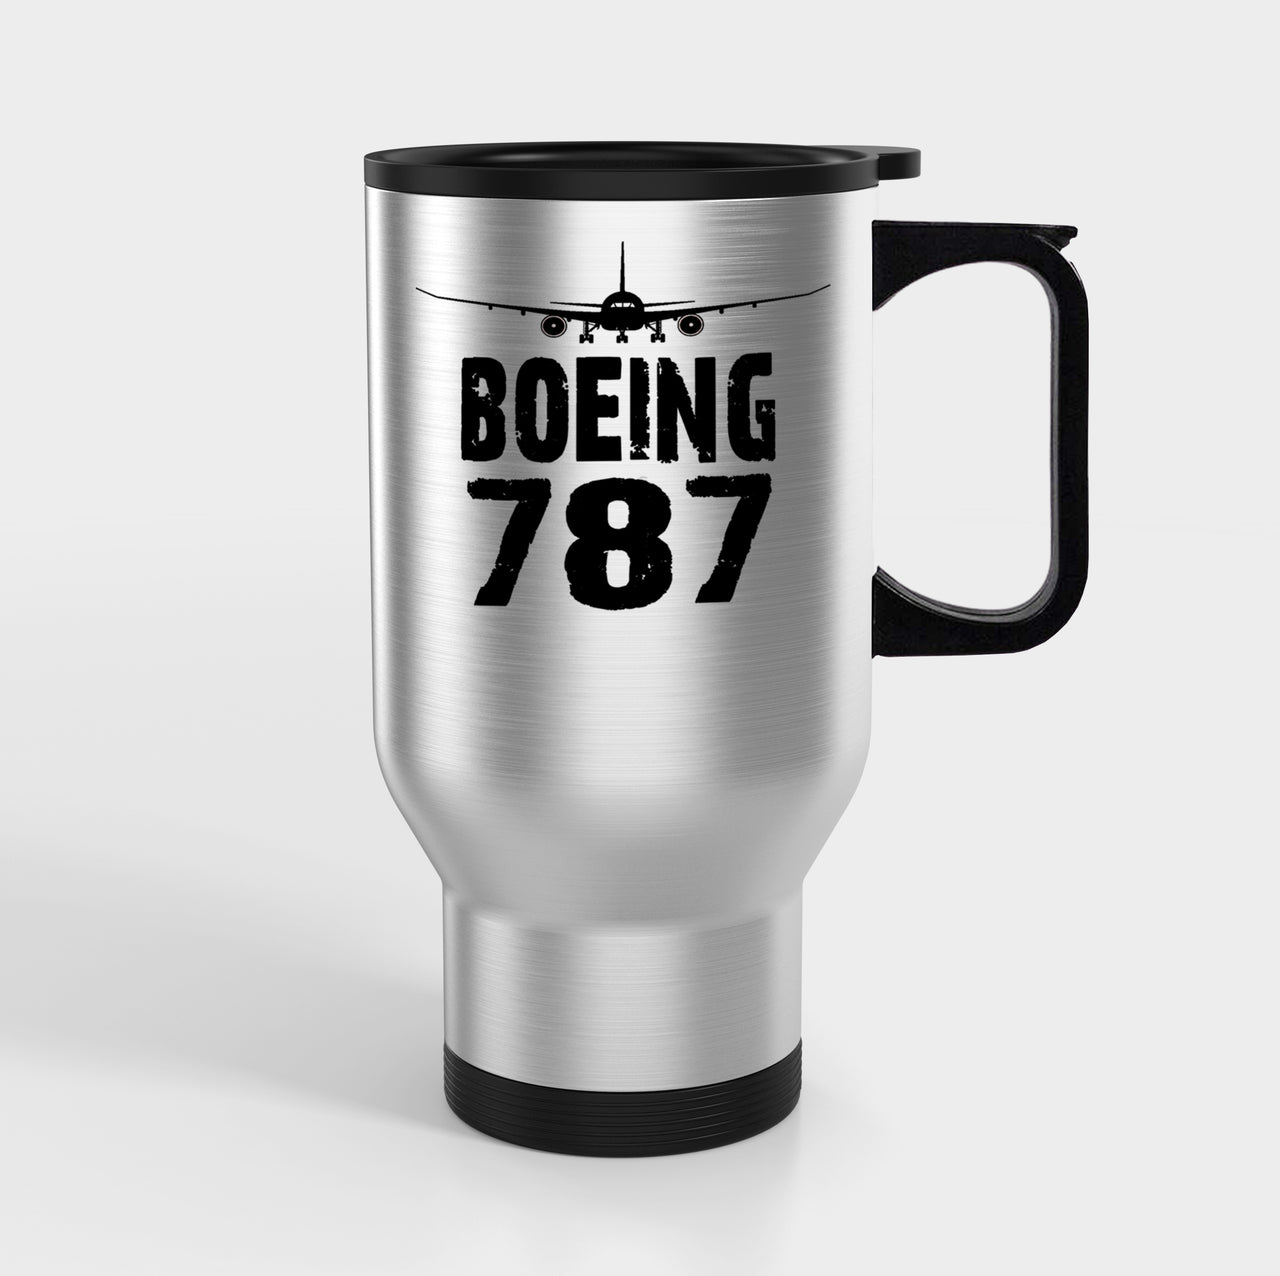 Boeing 787 & Plane Designed Travel Mugs (With Holder)